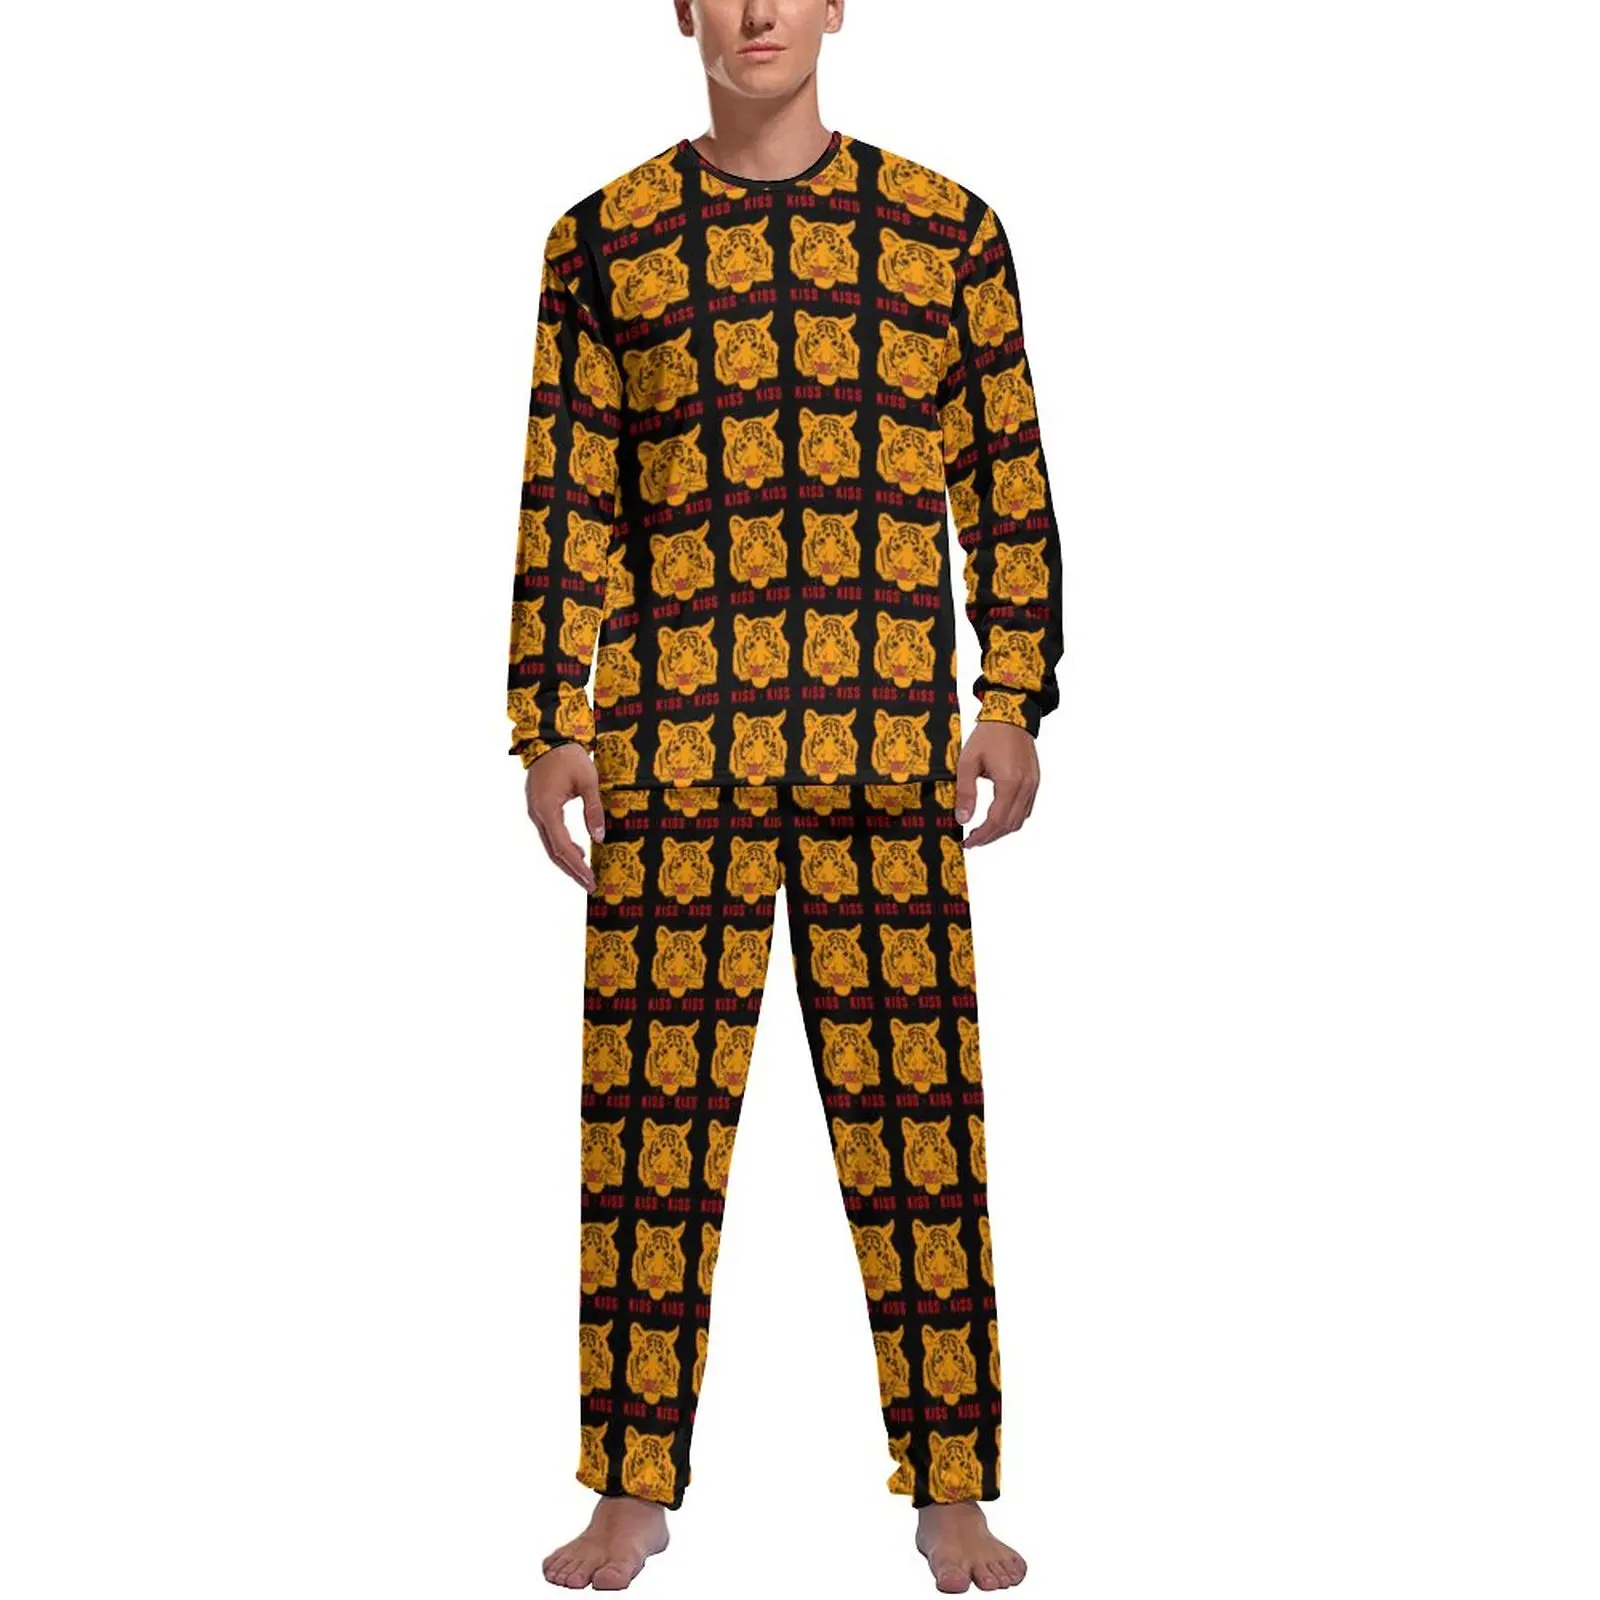 Cute Tiger Kiss Pajamas Men Animal Face Print Cute Sleepwear Winter Long Sleeves 2 Pieces Casual Printed Pajamas Set